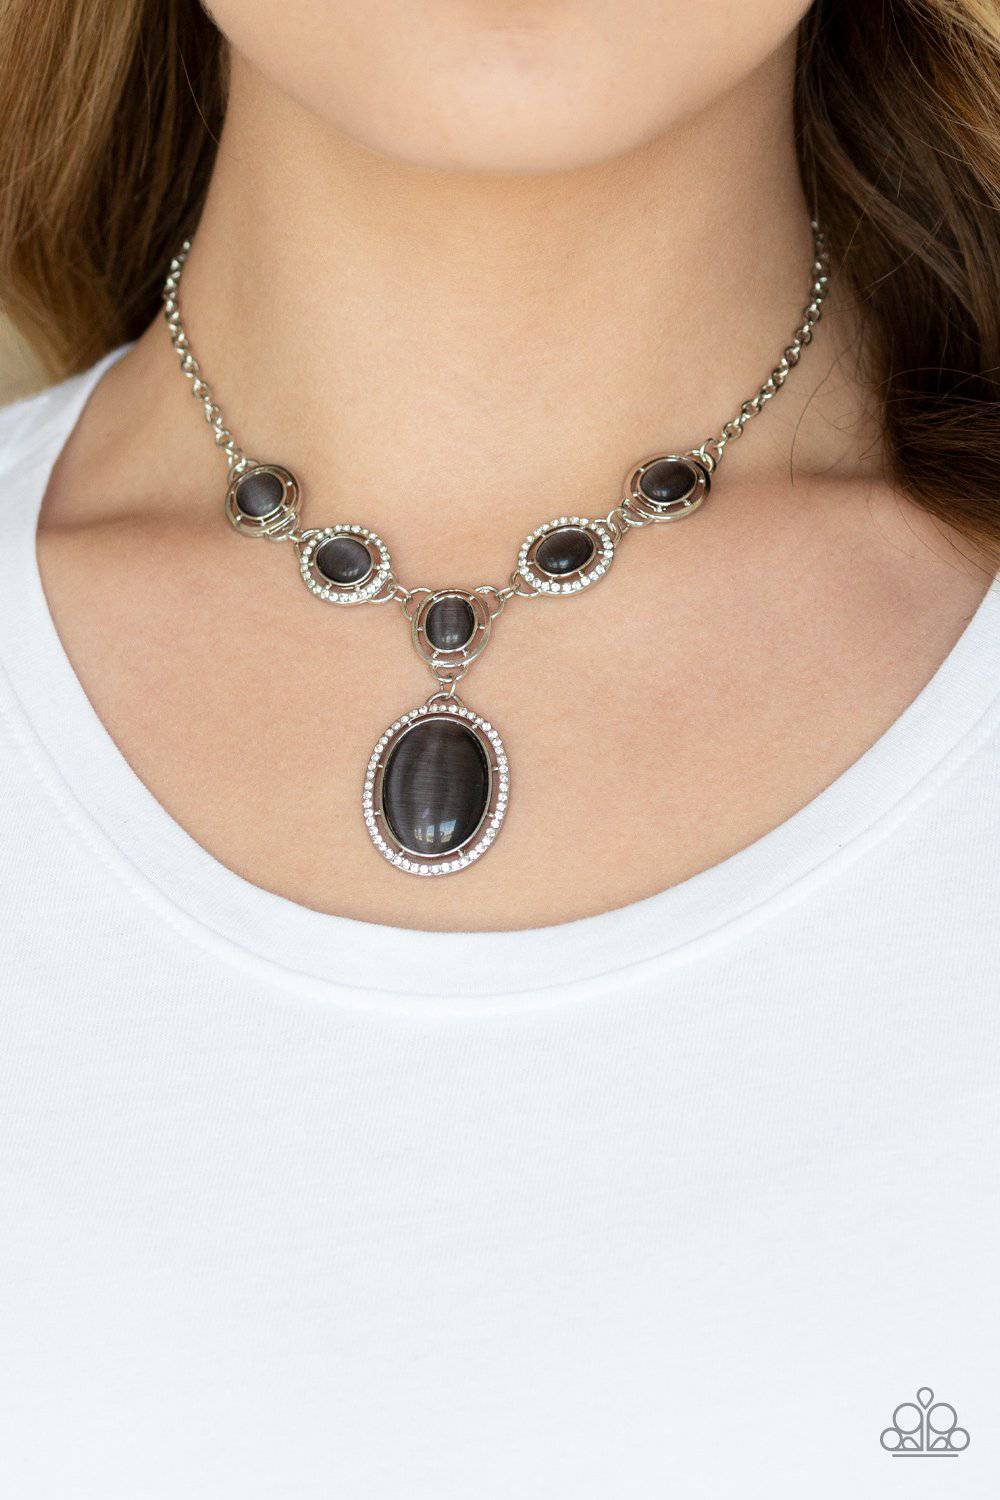 Metro Medallion - Black Cat's Eye Necklace - Paparazzi Accessories - GlaMarous Titi Jewels